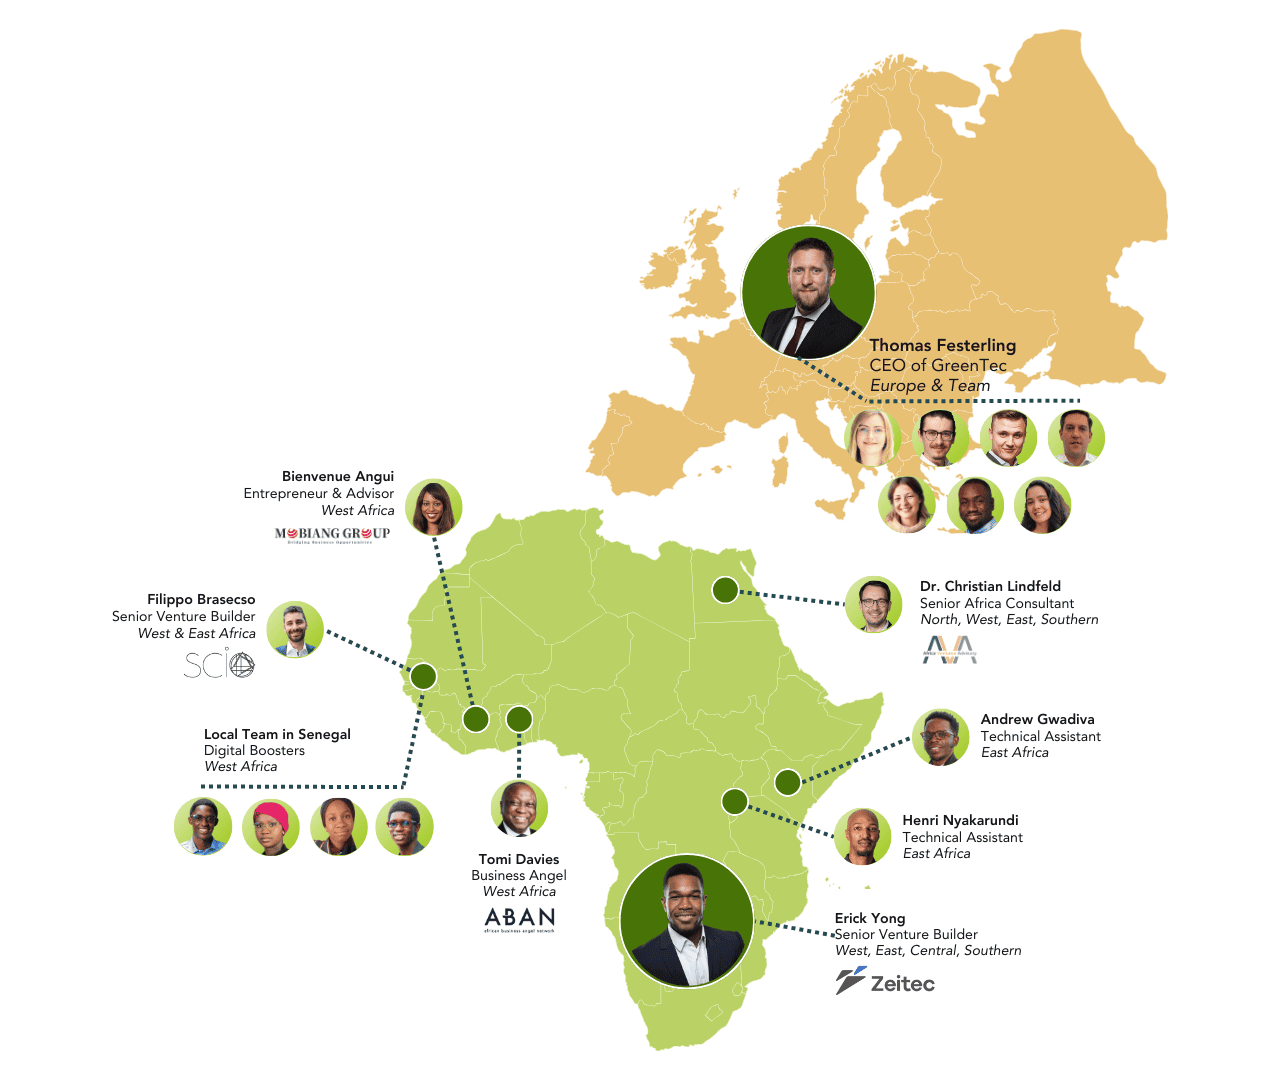 Map of GreenTec employees